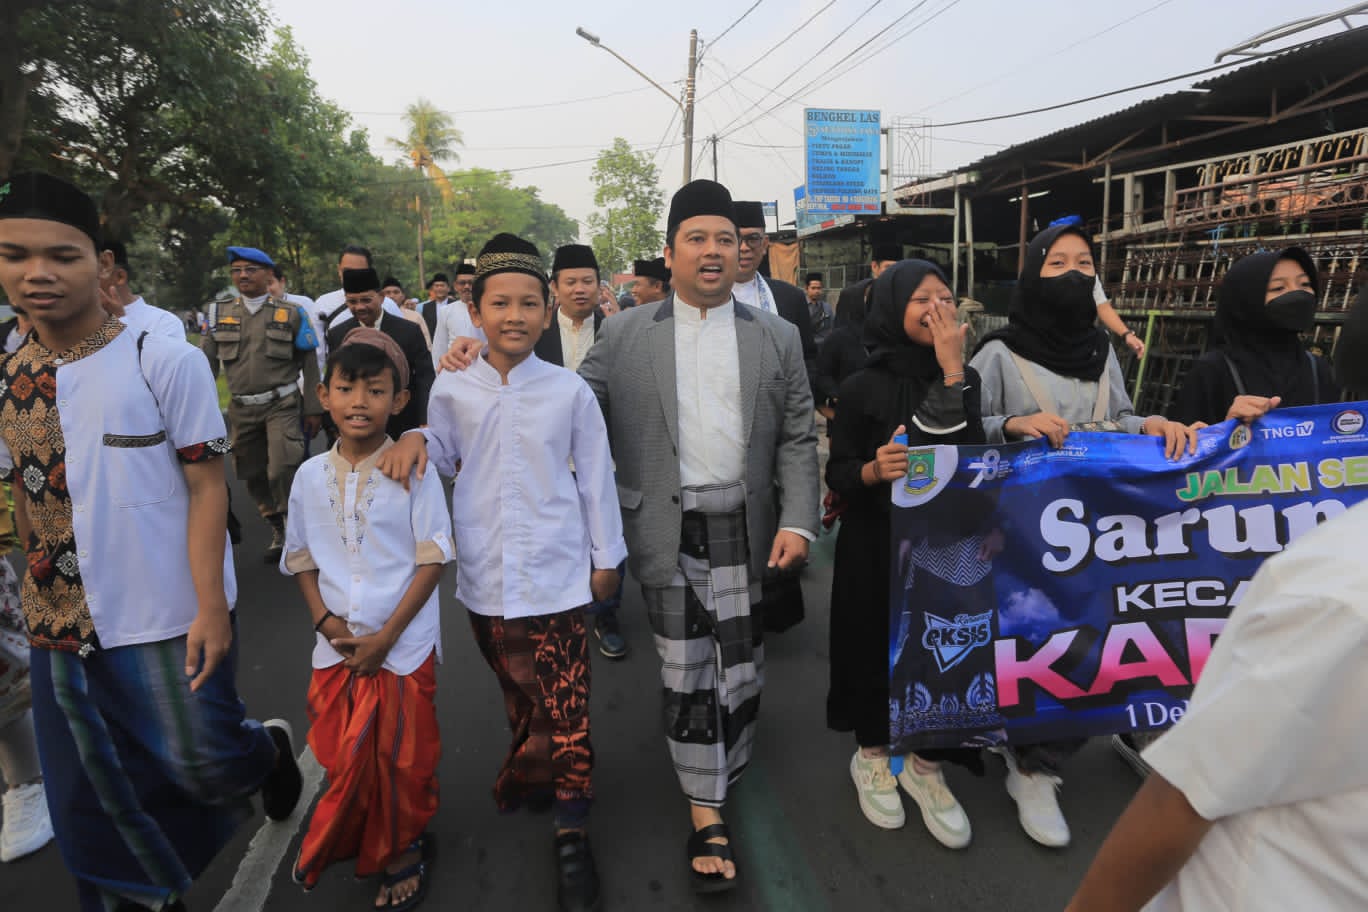 Wali Kota Tangerang Arief R Wismansyah bersama masyarakat jalan santai sarungan